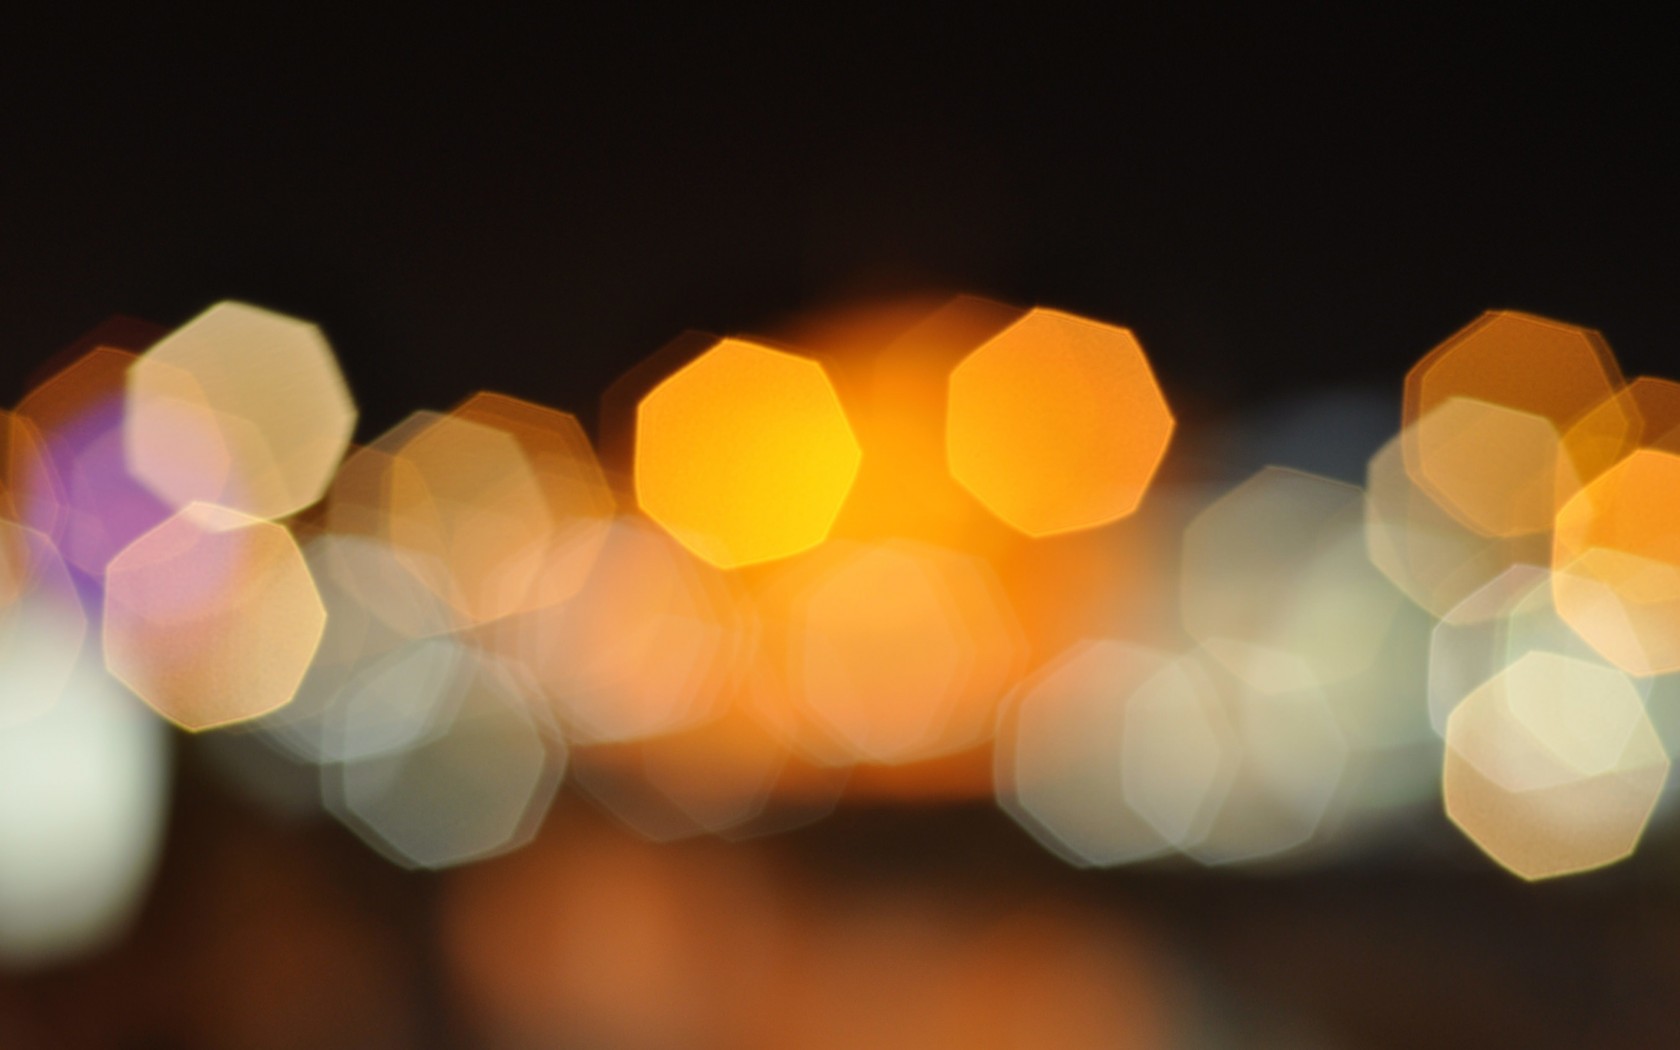 Blurred City Lights Wallpaper for Desktop 1680x1050